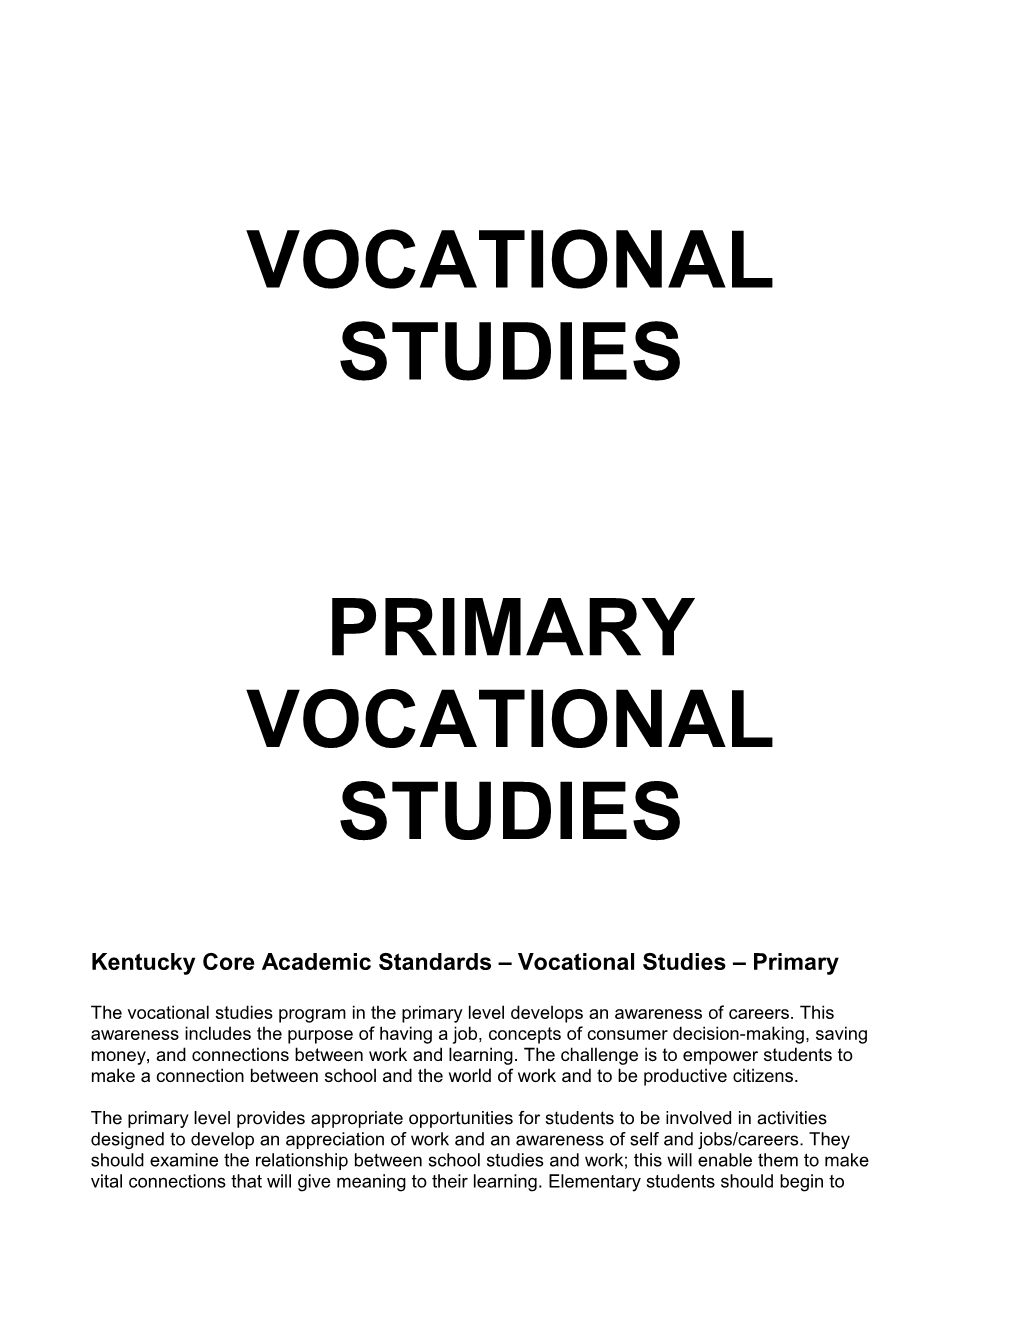 Kentucky Core Academic Standards Vocational Studies Primary